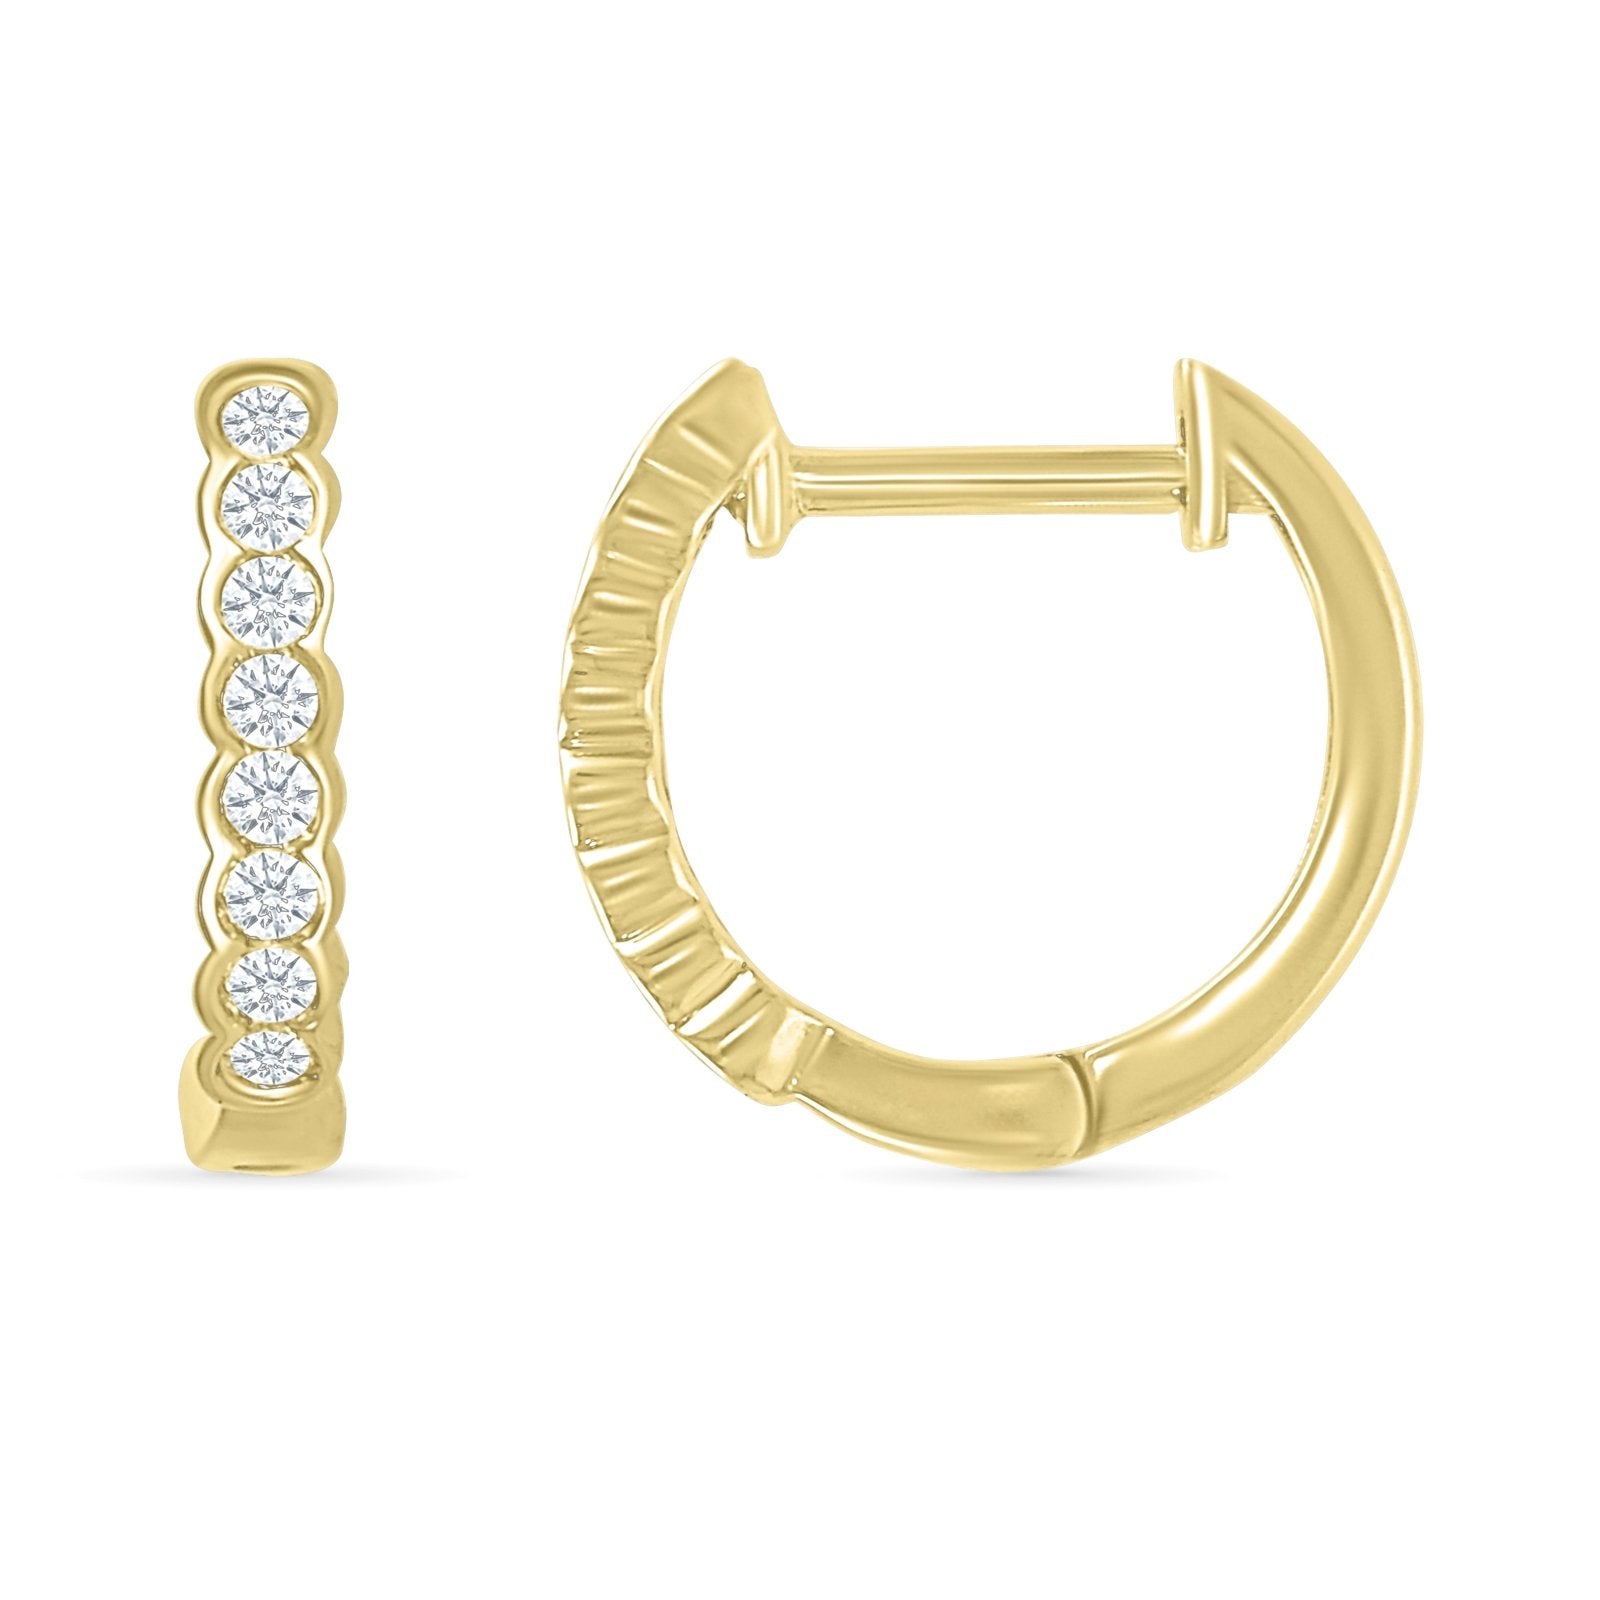 Bezel Set Diamond Hoop Earrings Earrings Estella Collection #product_description# 32680 Diamond Made to Order Traditional Stud #tag4# #tag5# #tag6# #tag7# #tag8# #tag9# #tag10#